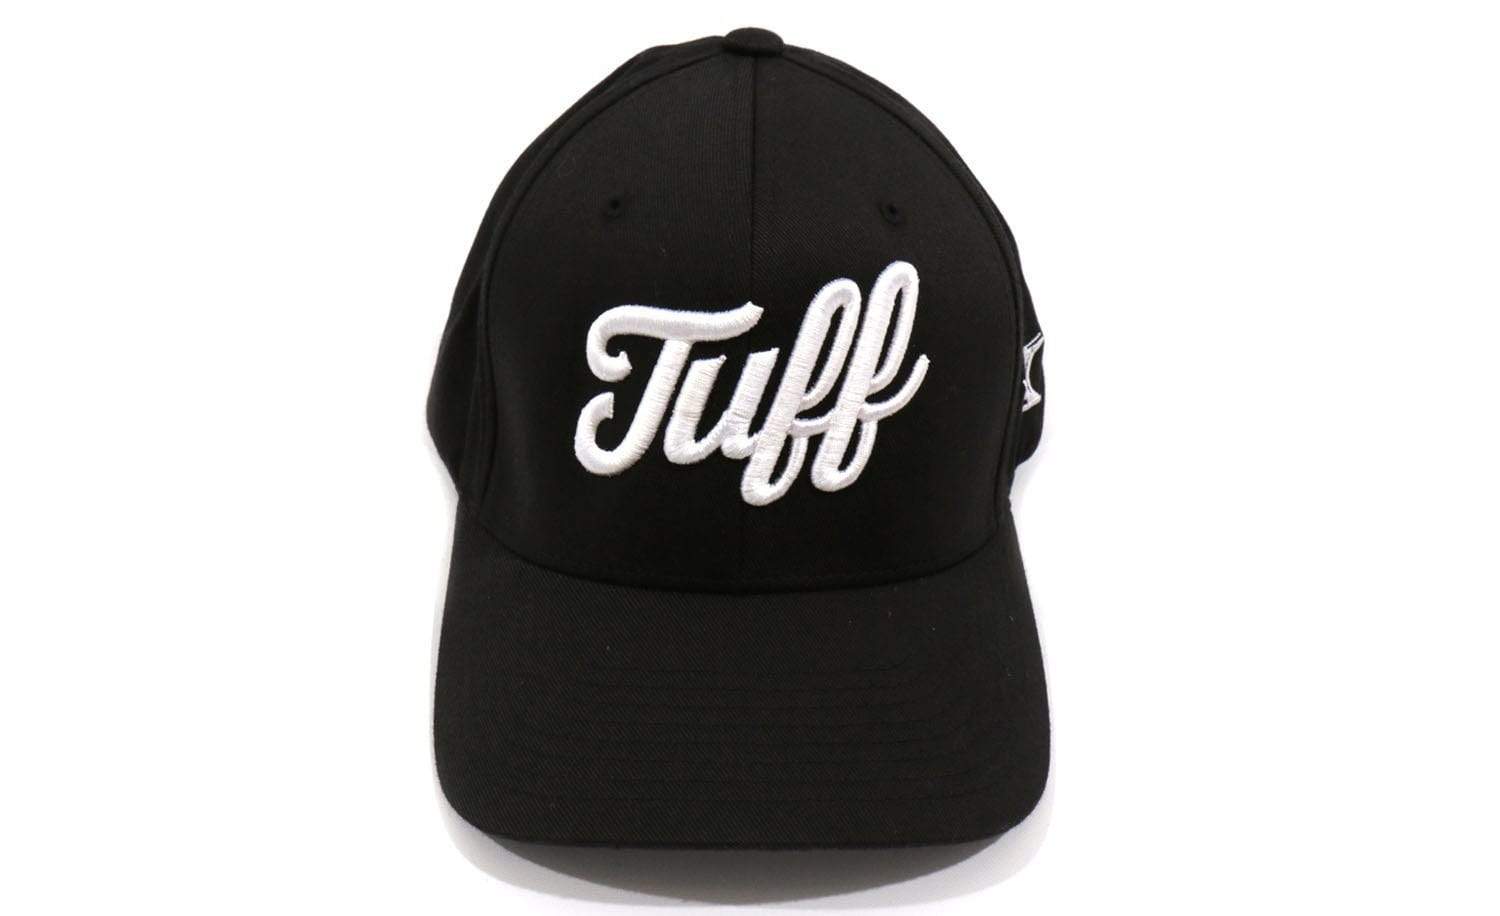 TUFF Script Black Flexfit Hat XS (6 5/8" - 7 1/8") / Black TuffWraps.com